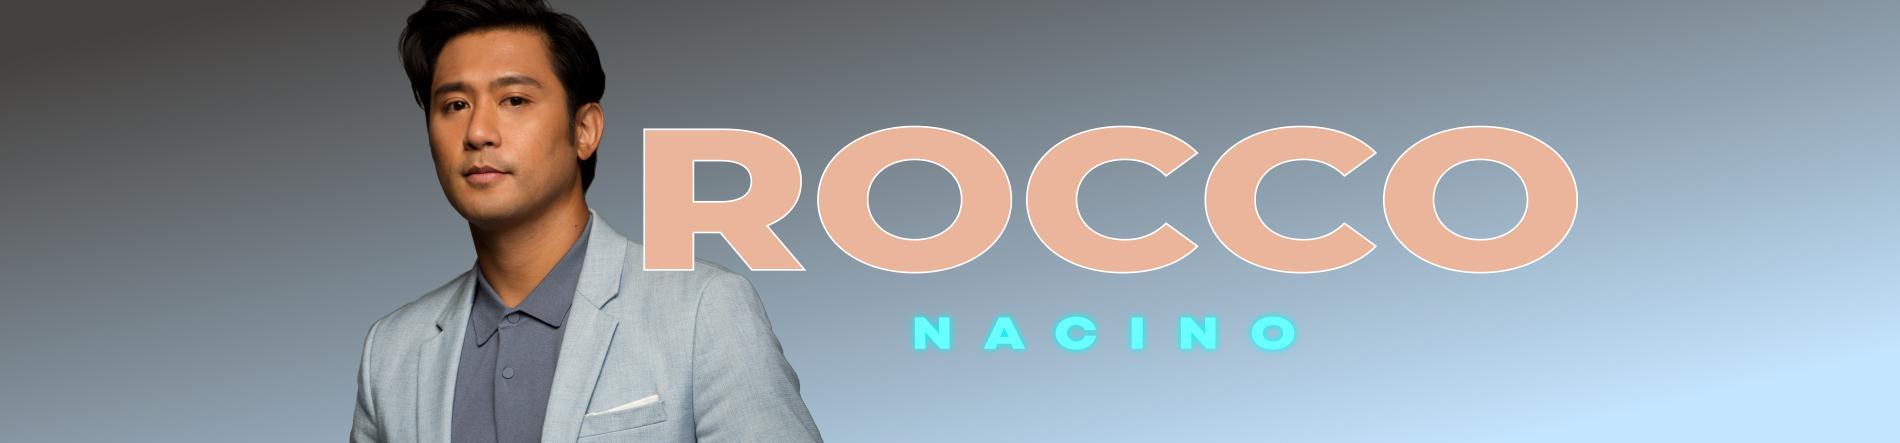 Rocco Nacino Desktop Banner